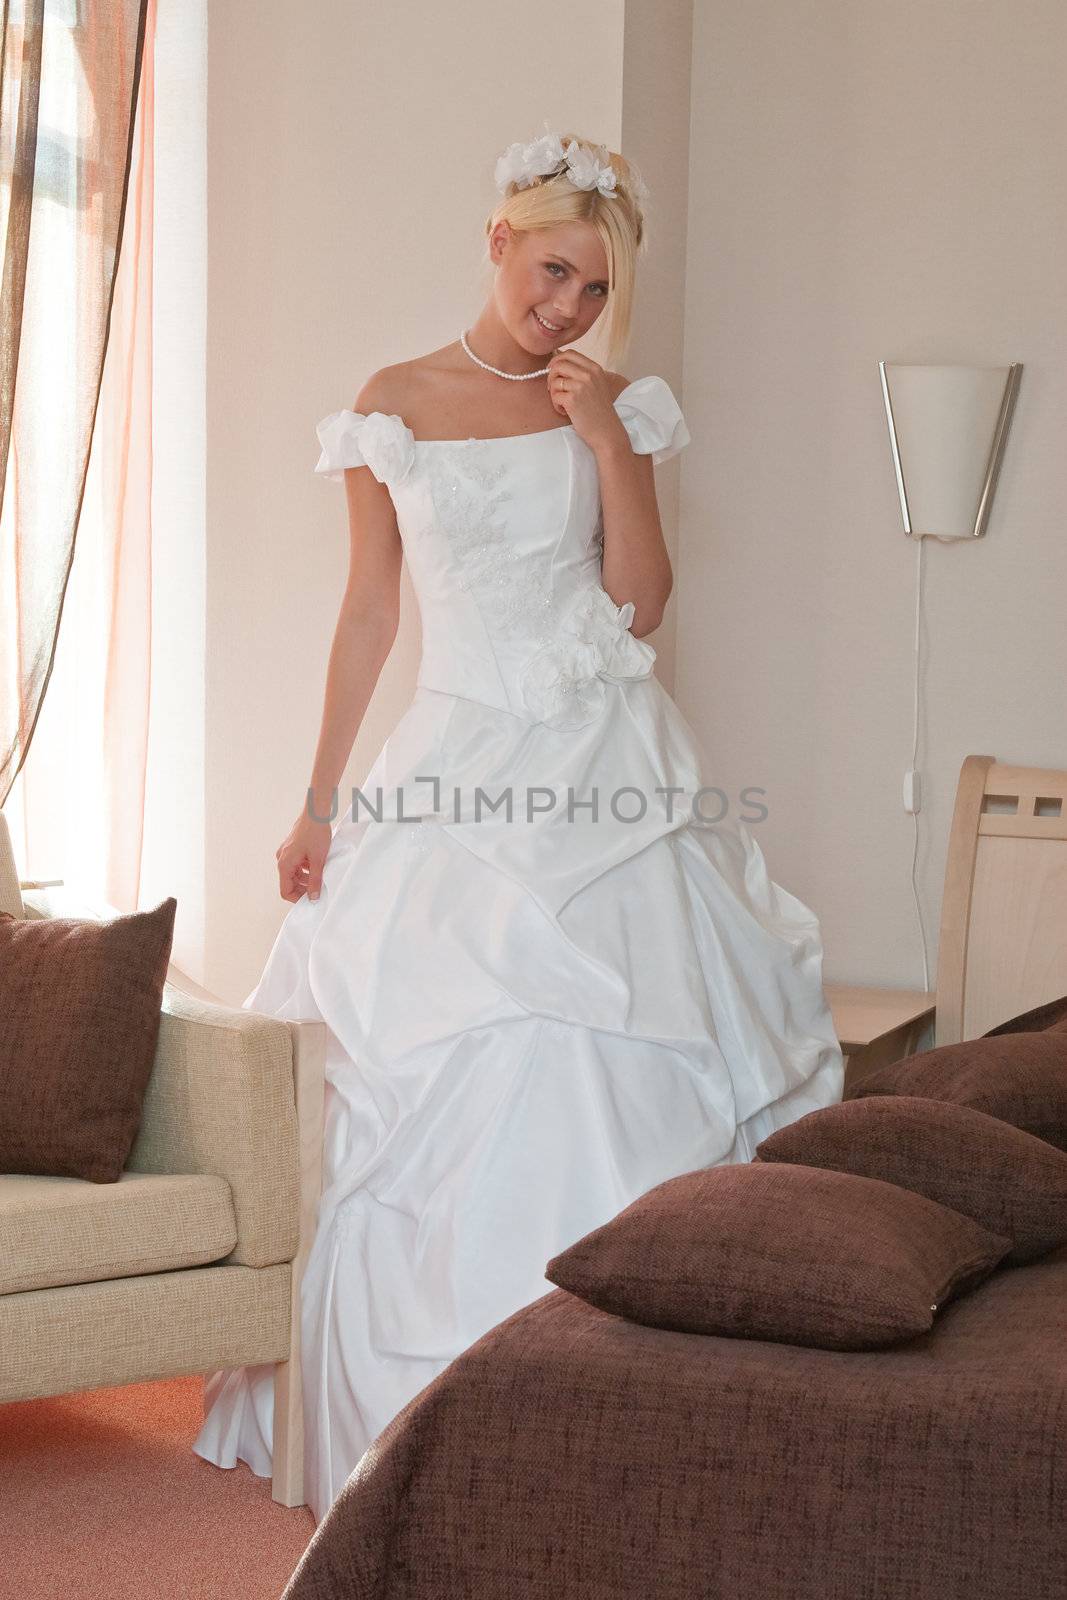 Beautiful blonde bride in white dress in interior